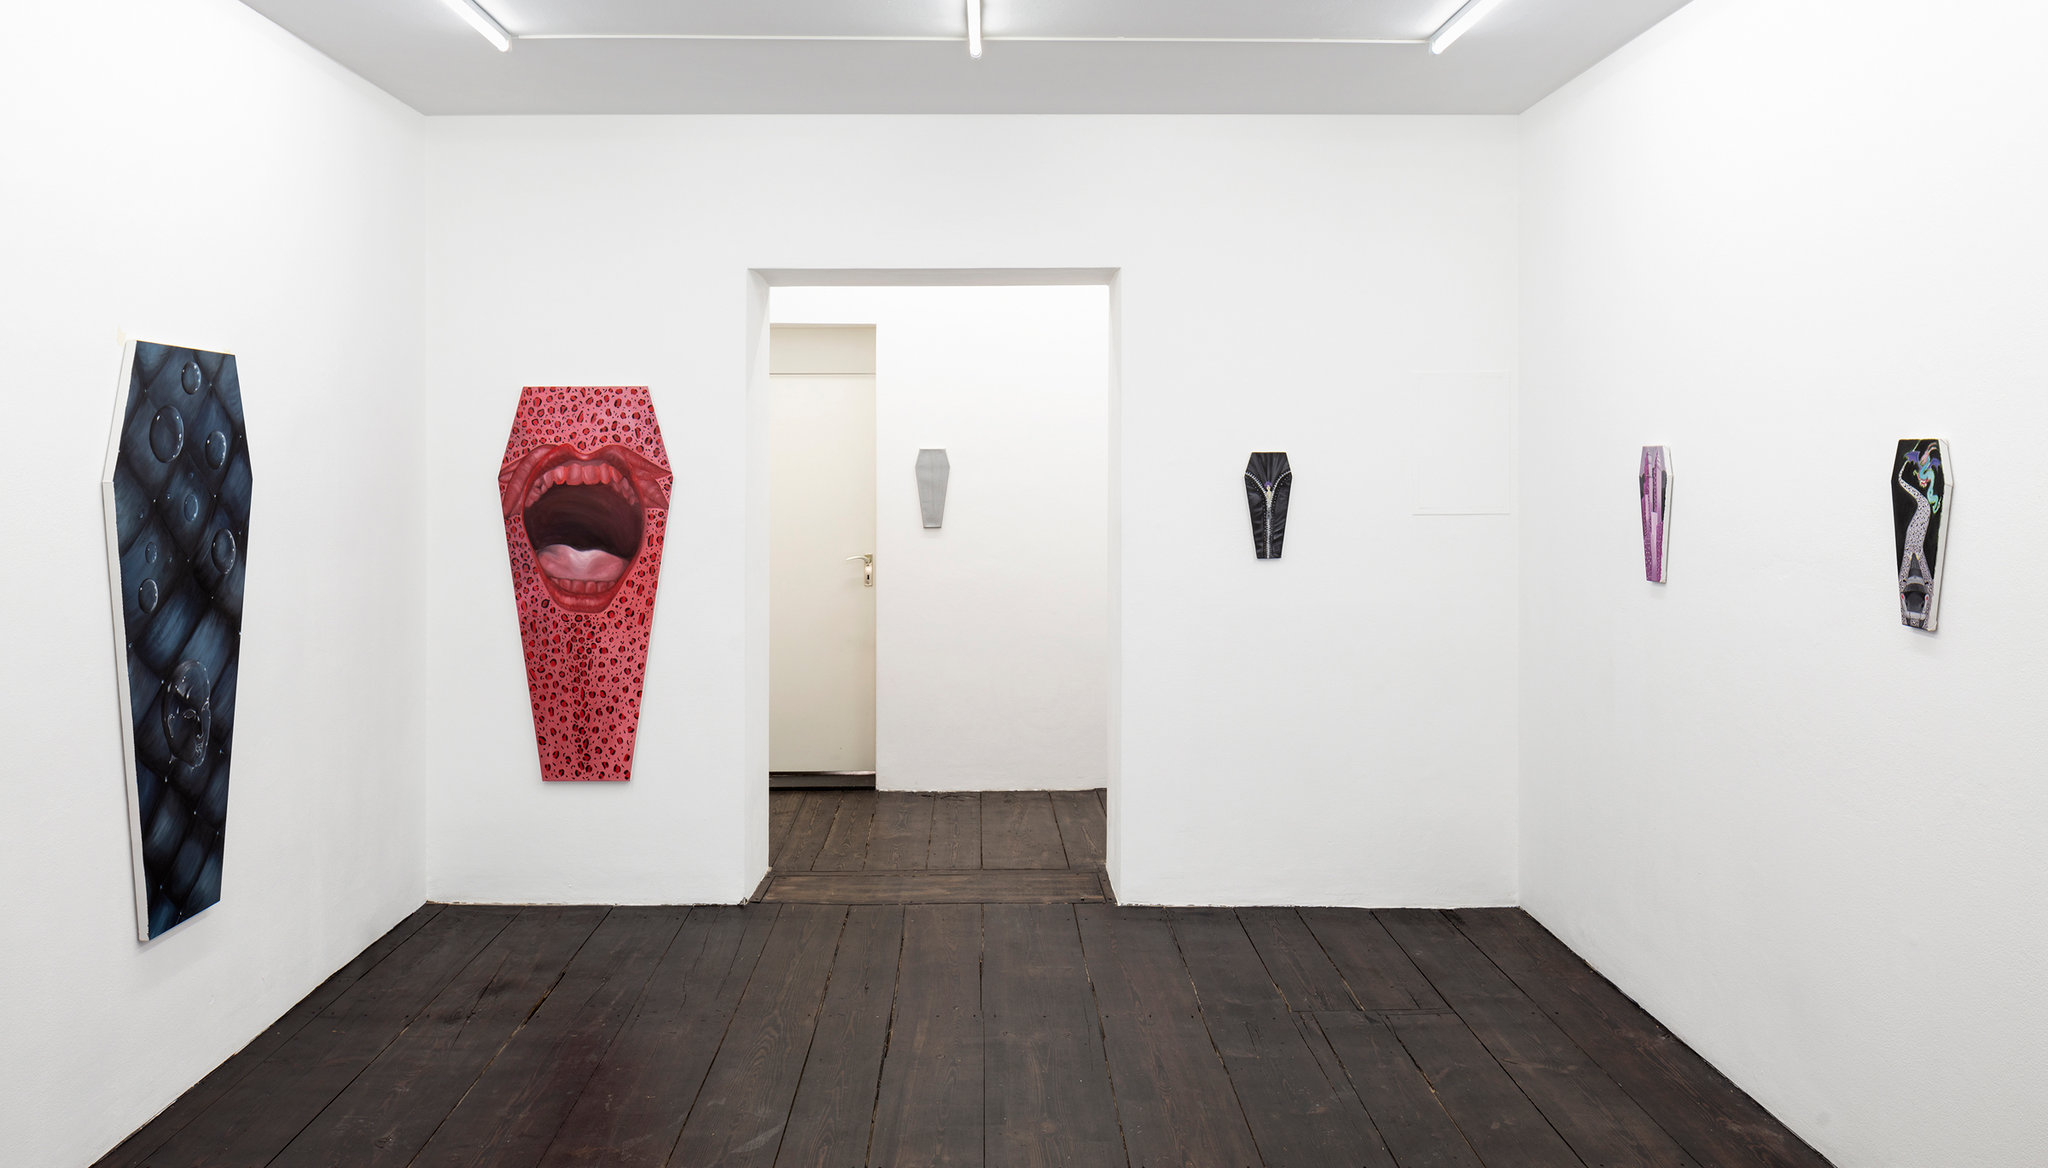 Quintessa Matranga, "rhetoric", SANDY BROWN, Berlin, 2018, installation view